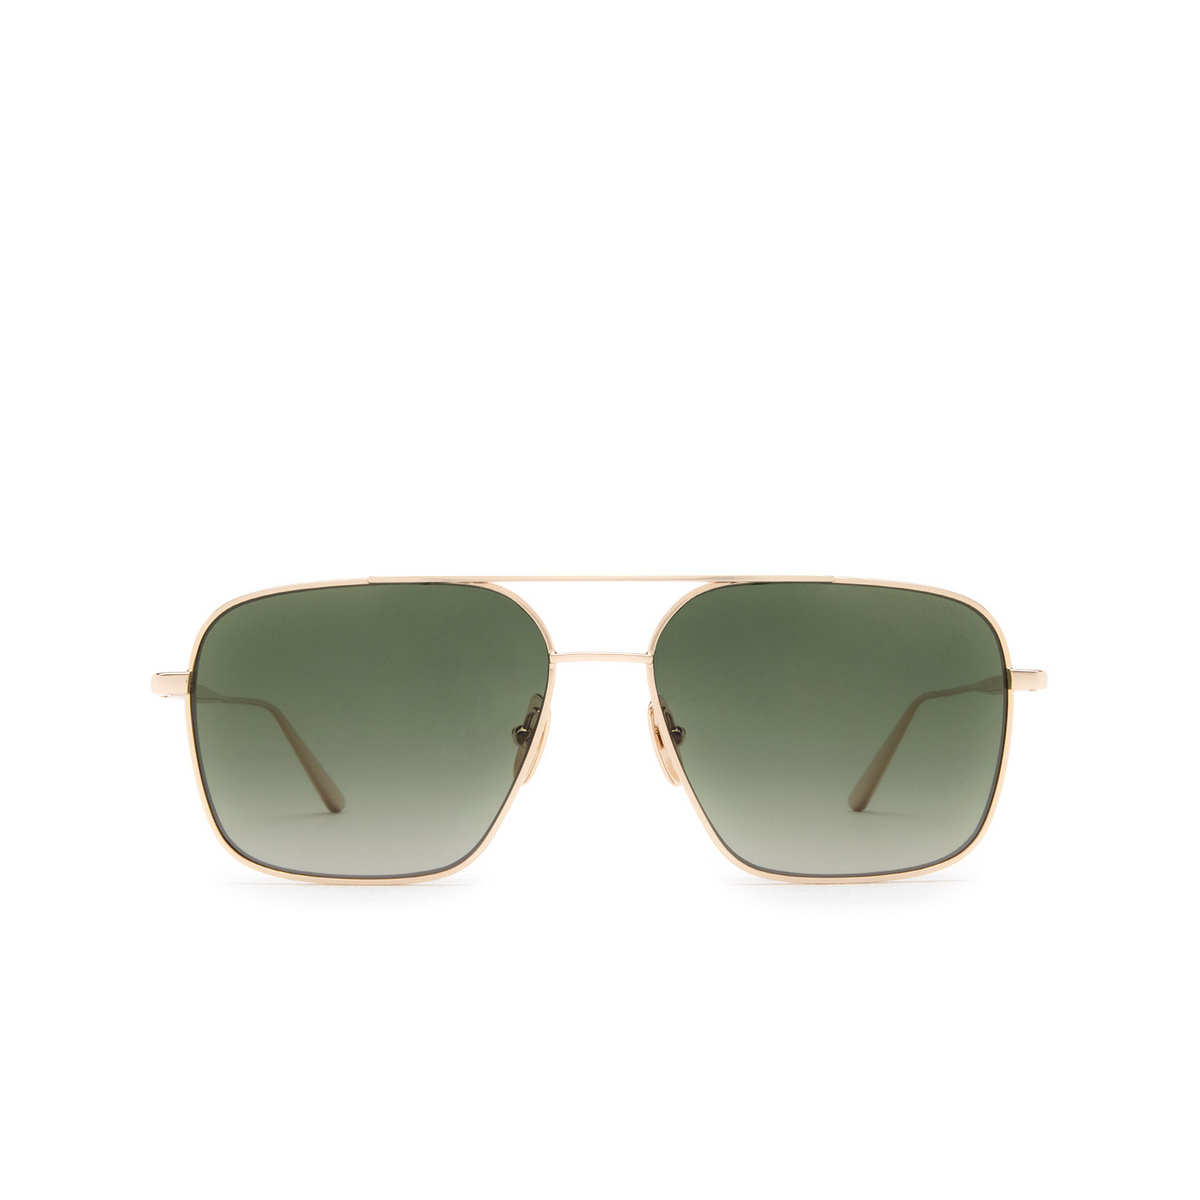 Chimi AVIATOR Sunglasses GREEN - front view